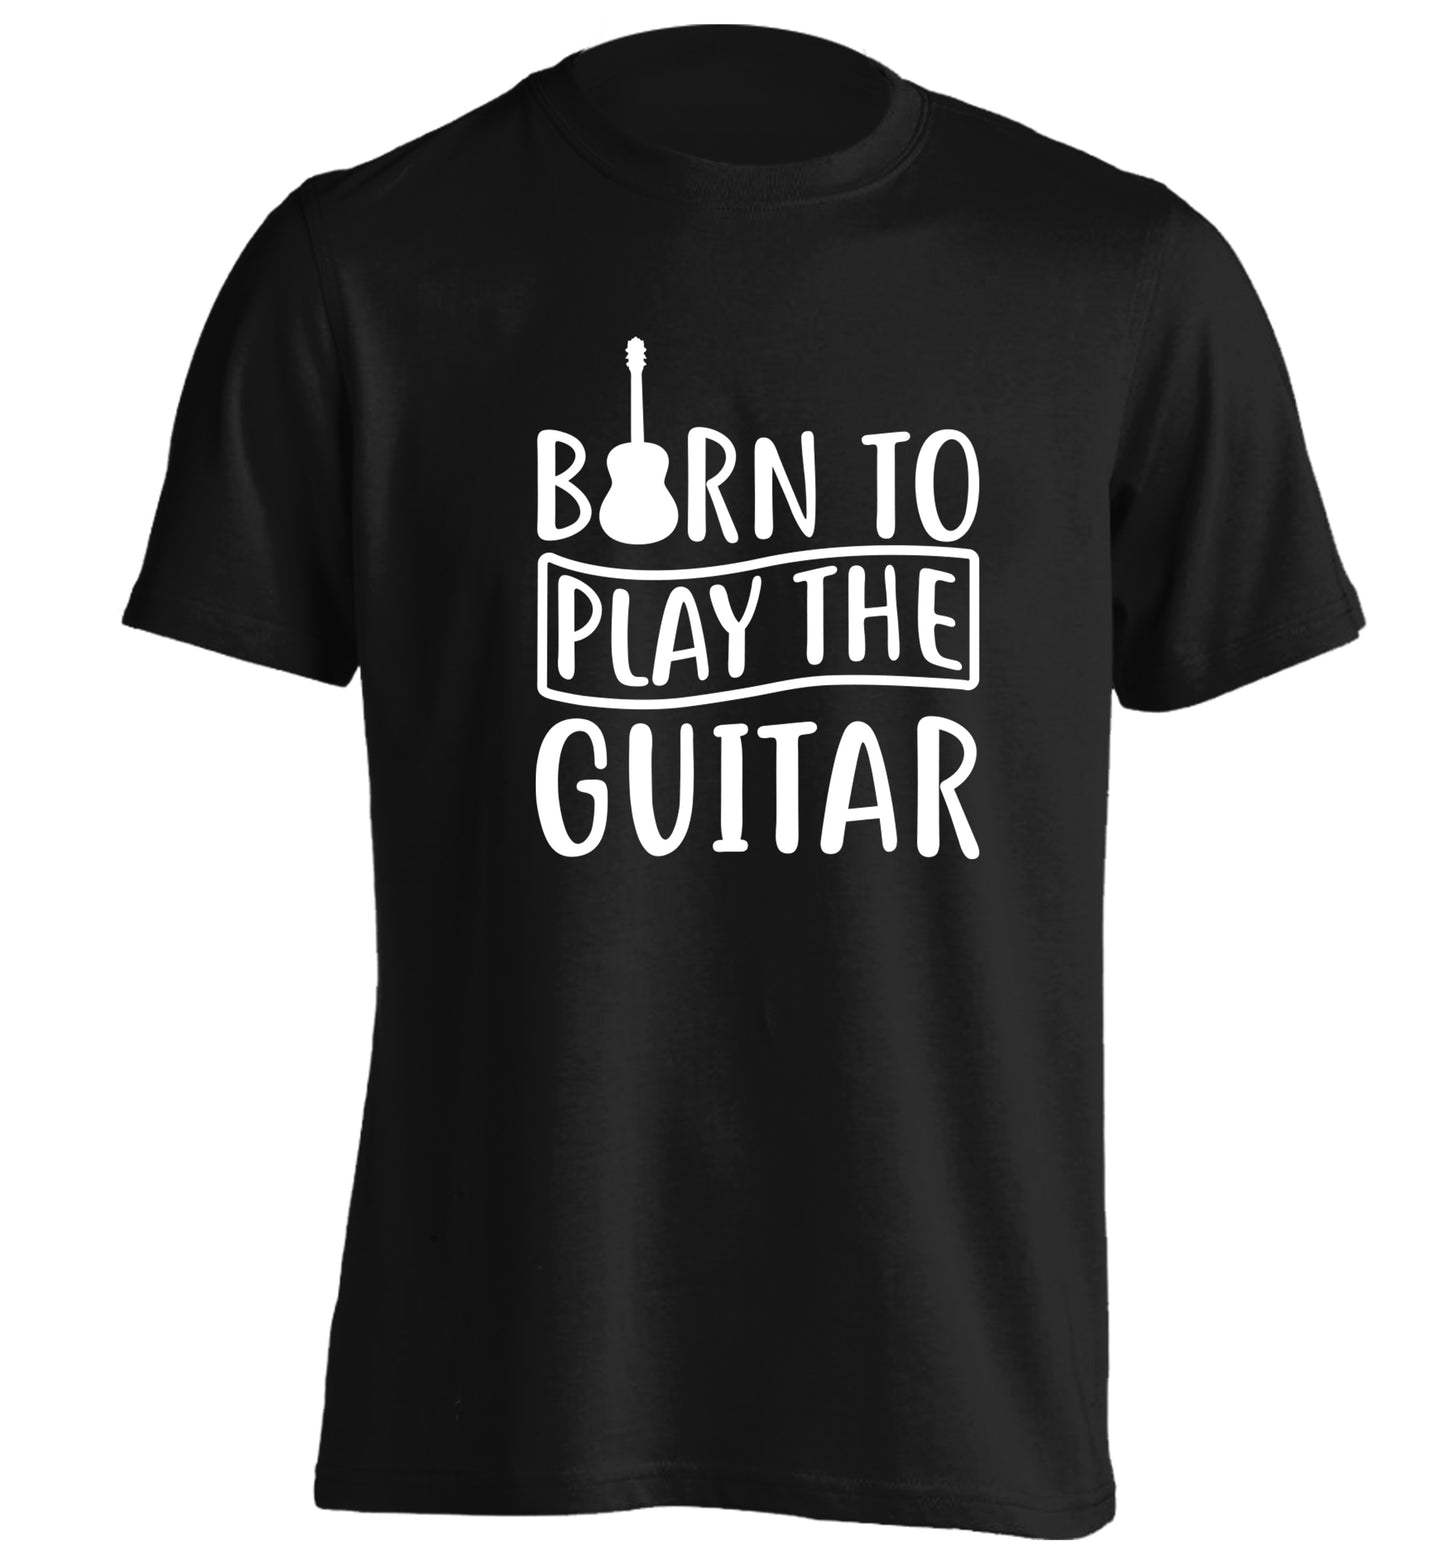 Born to play the guitar adults unisex black Tshirt 2XL